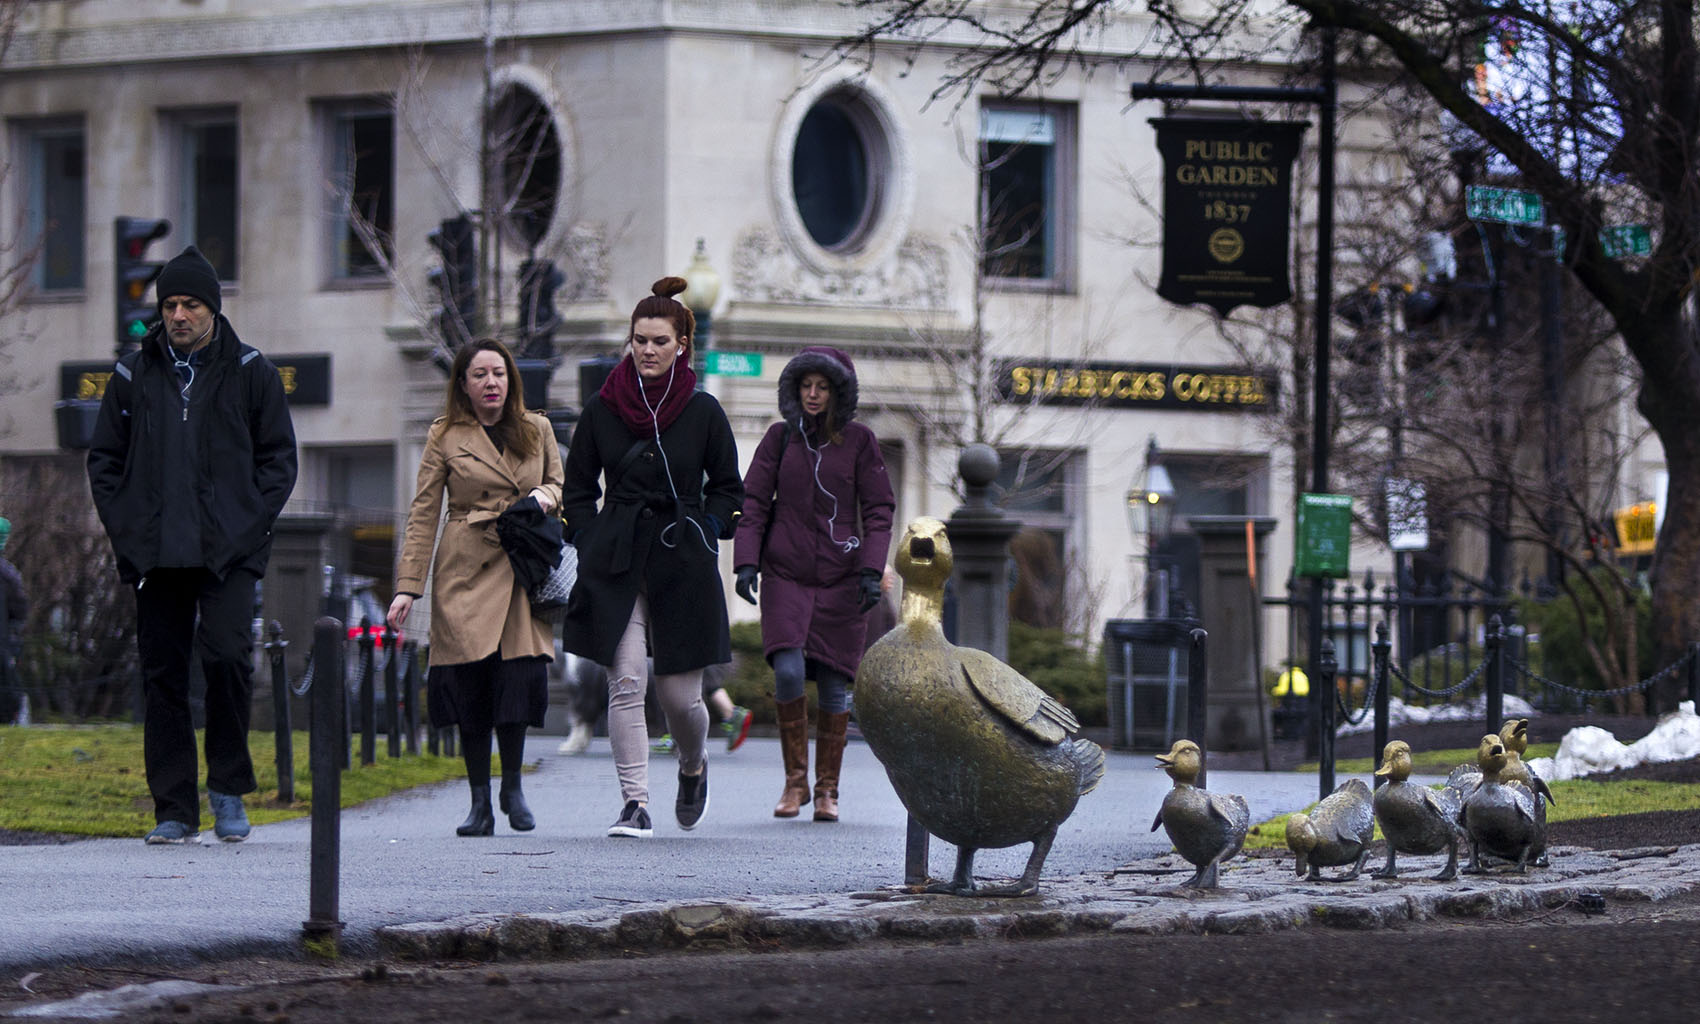 Pedestrians walking by the &quot;Ducklings&quot; in the Public Garden in Boston. (Jesse Costa/WBUR)